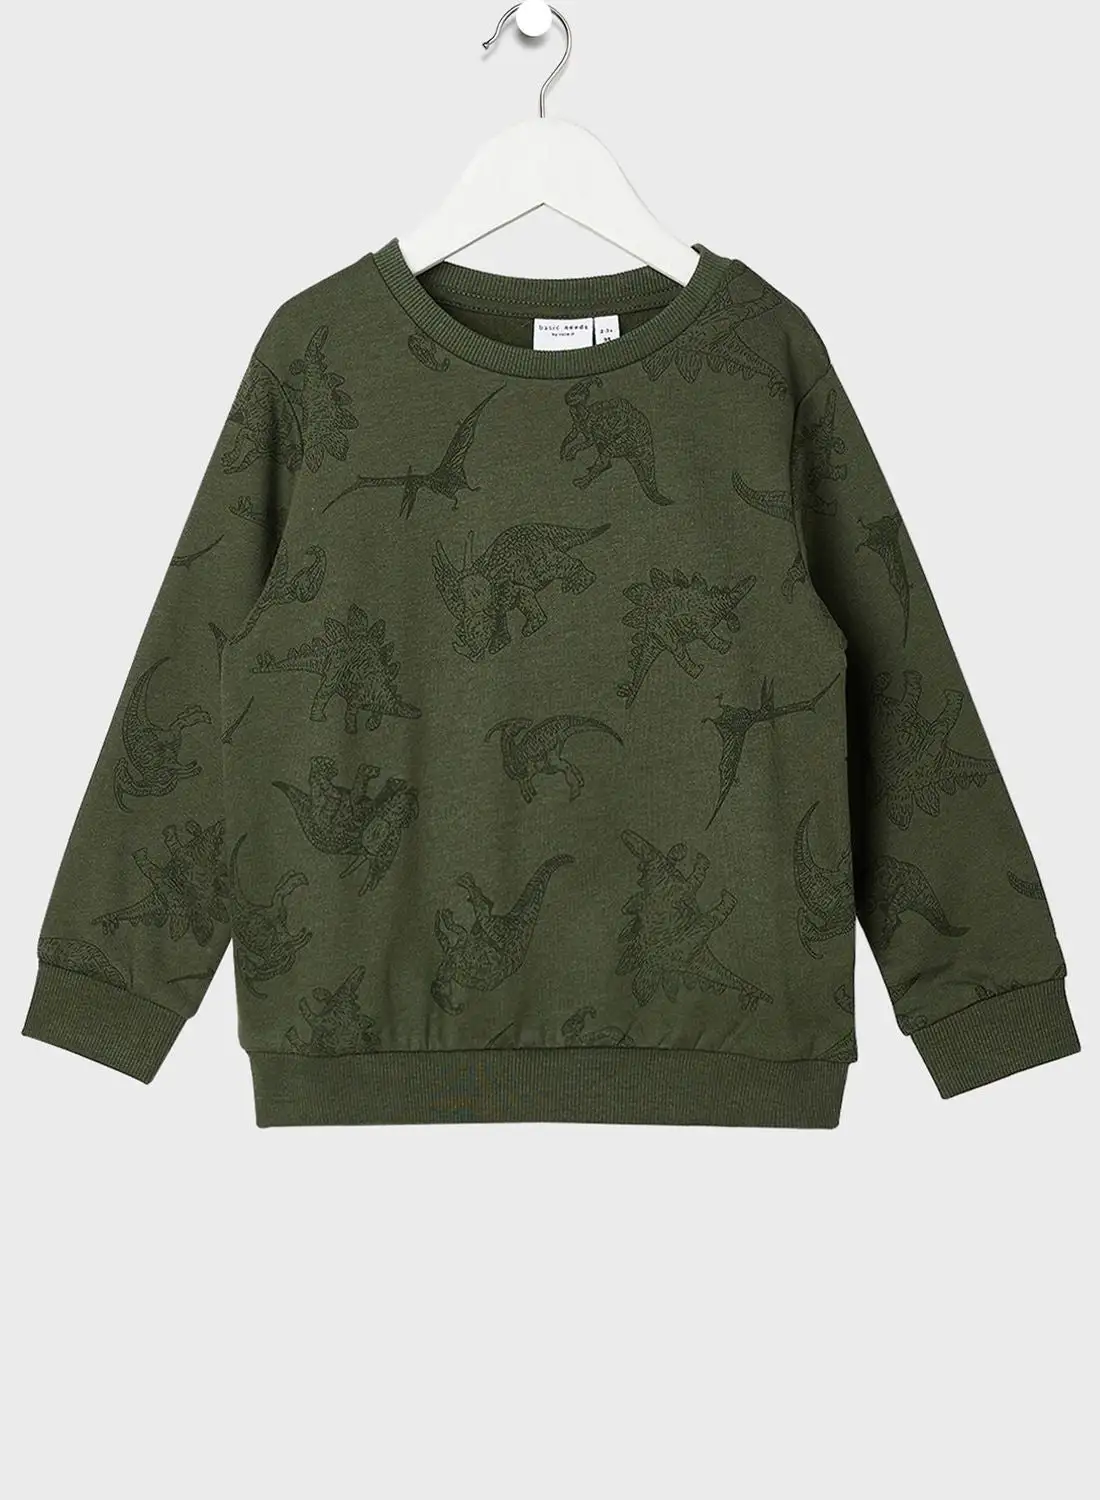 NAME IT Infant All-Over Dinosaur Print Sweatshirt